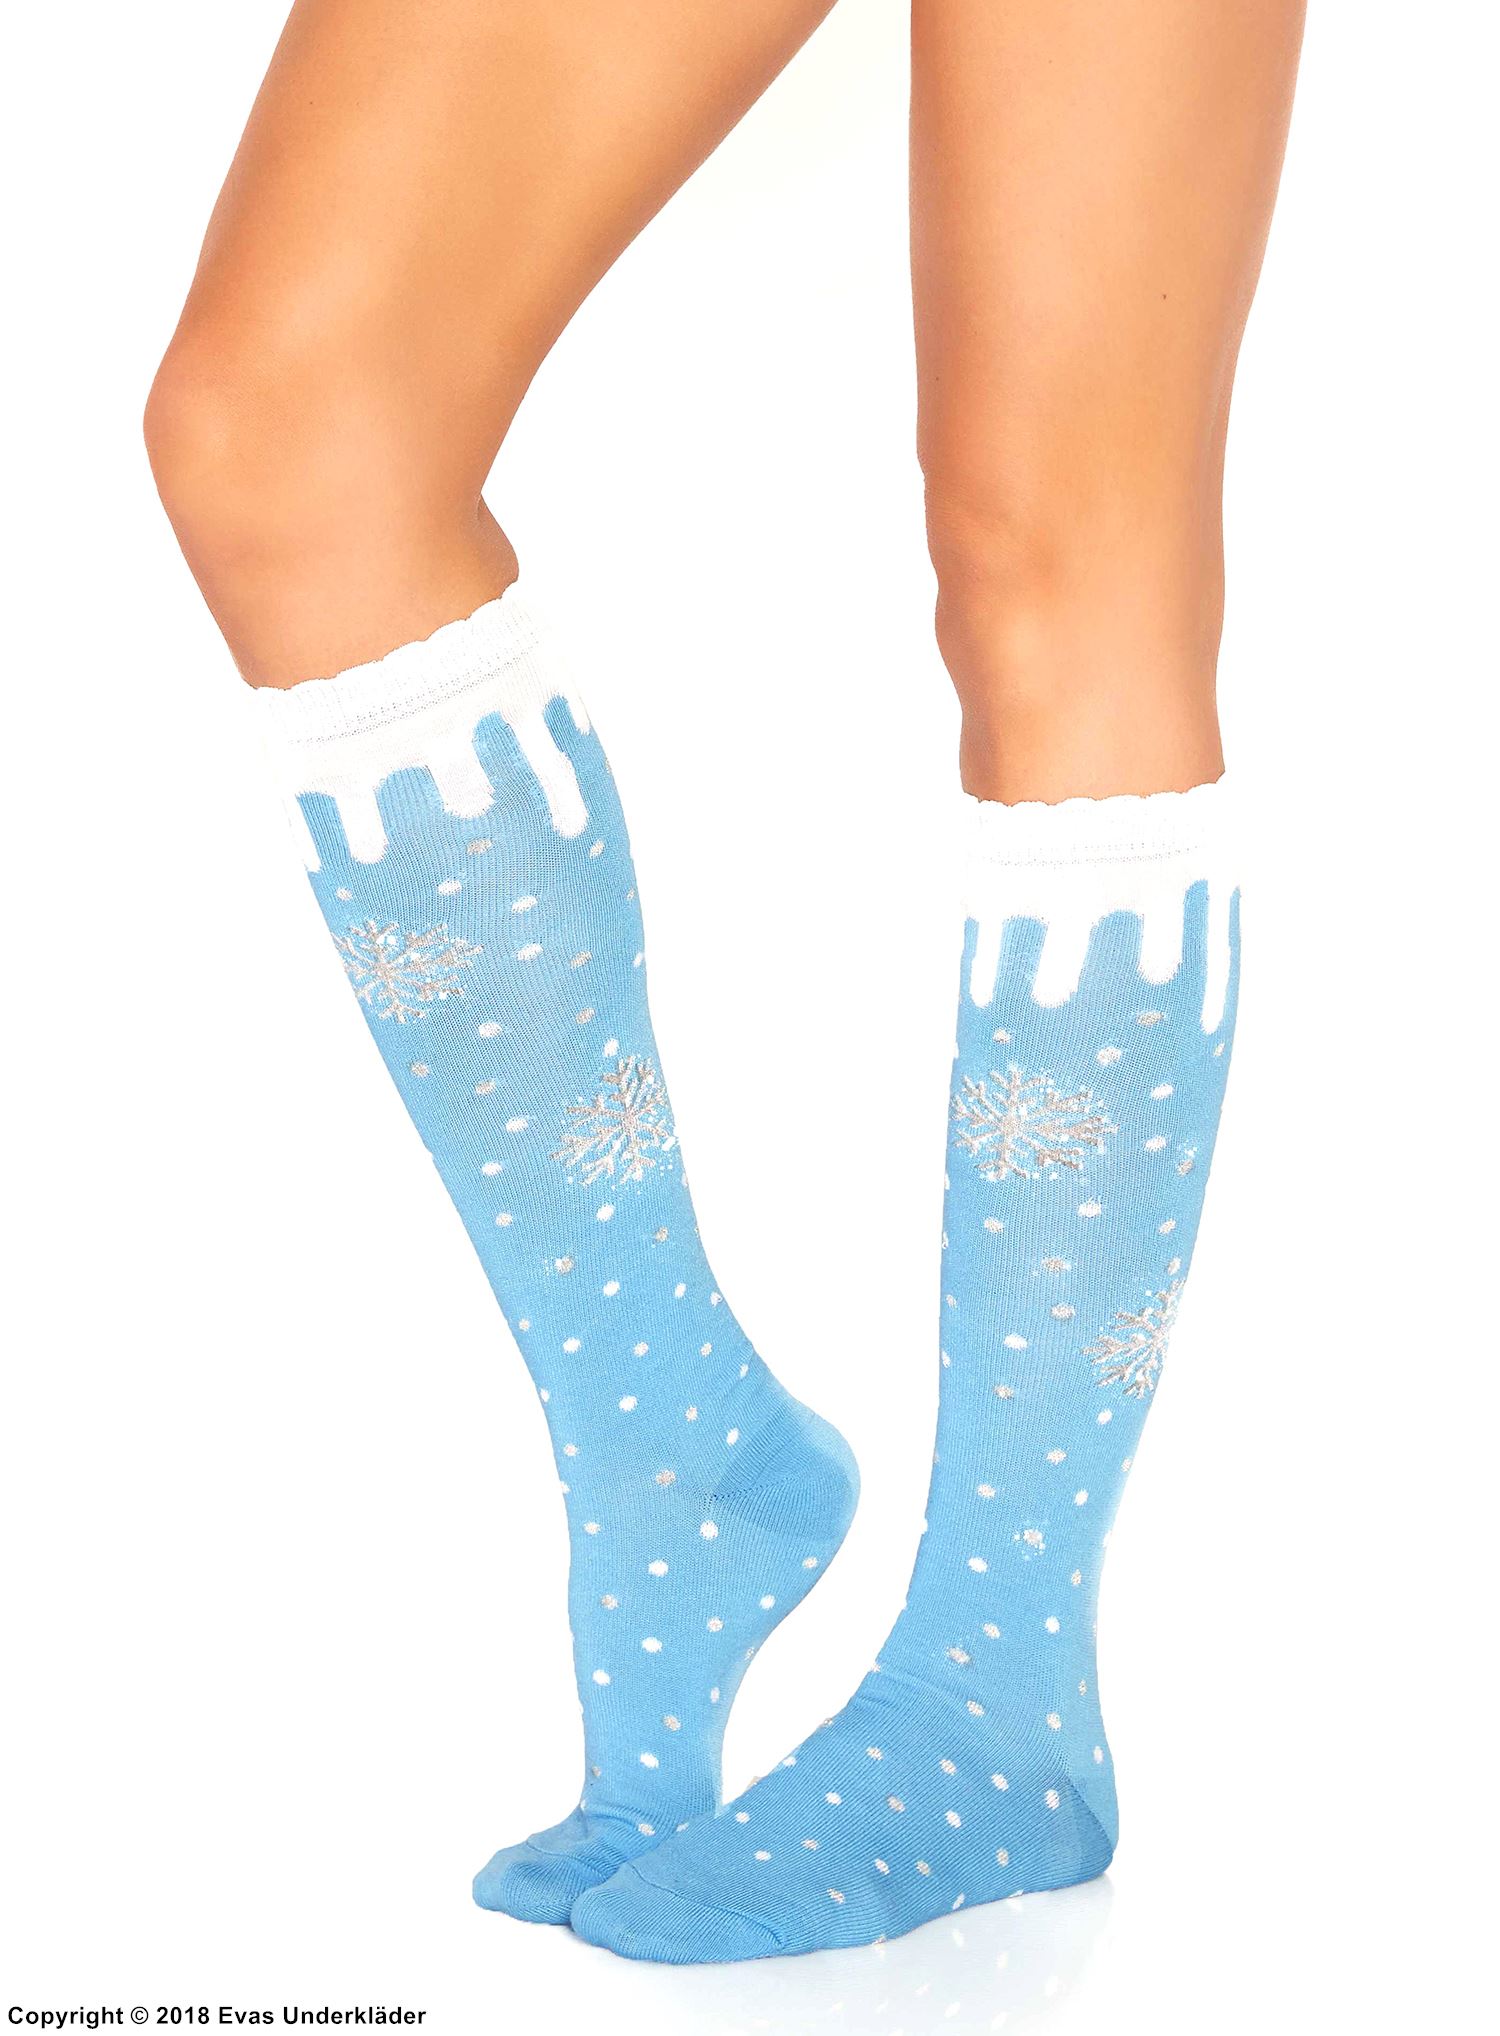 Cute knee socks, snowflakes, small dots